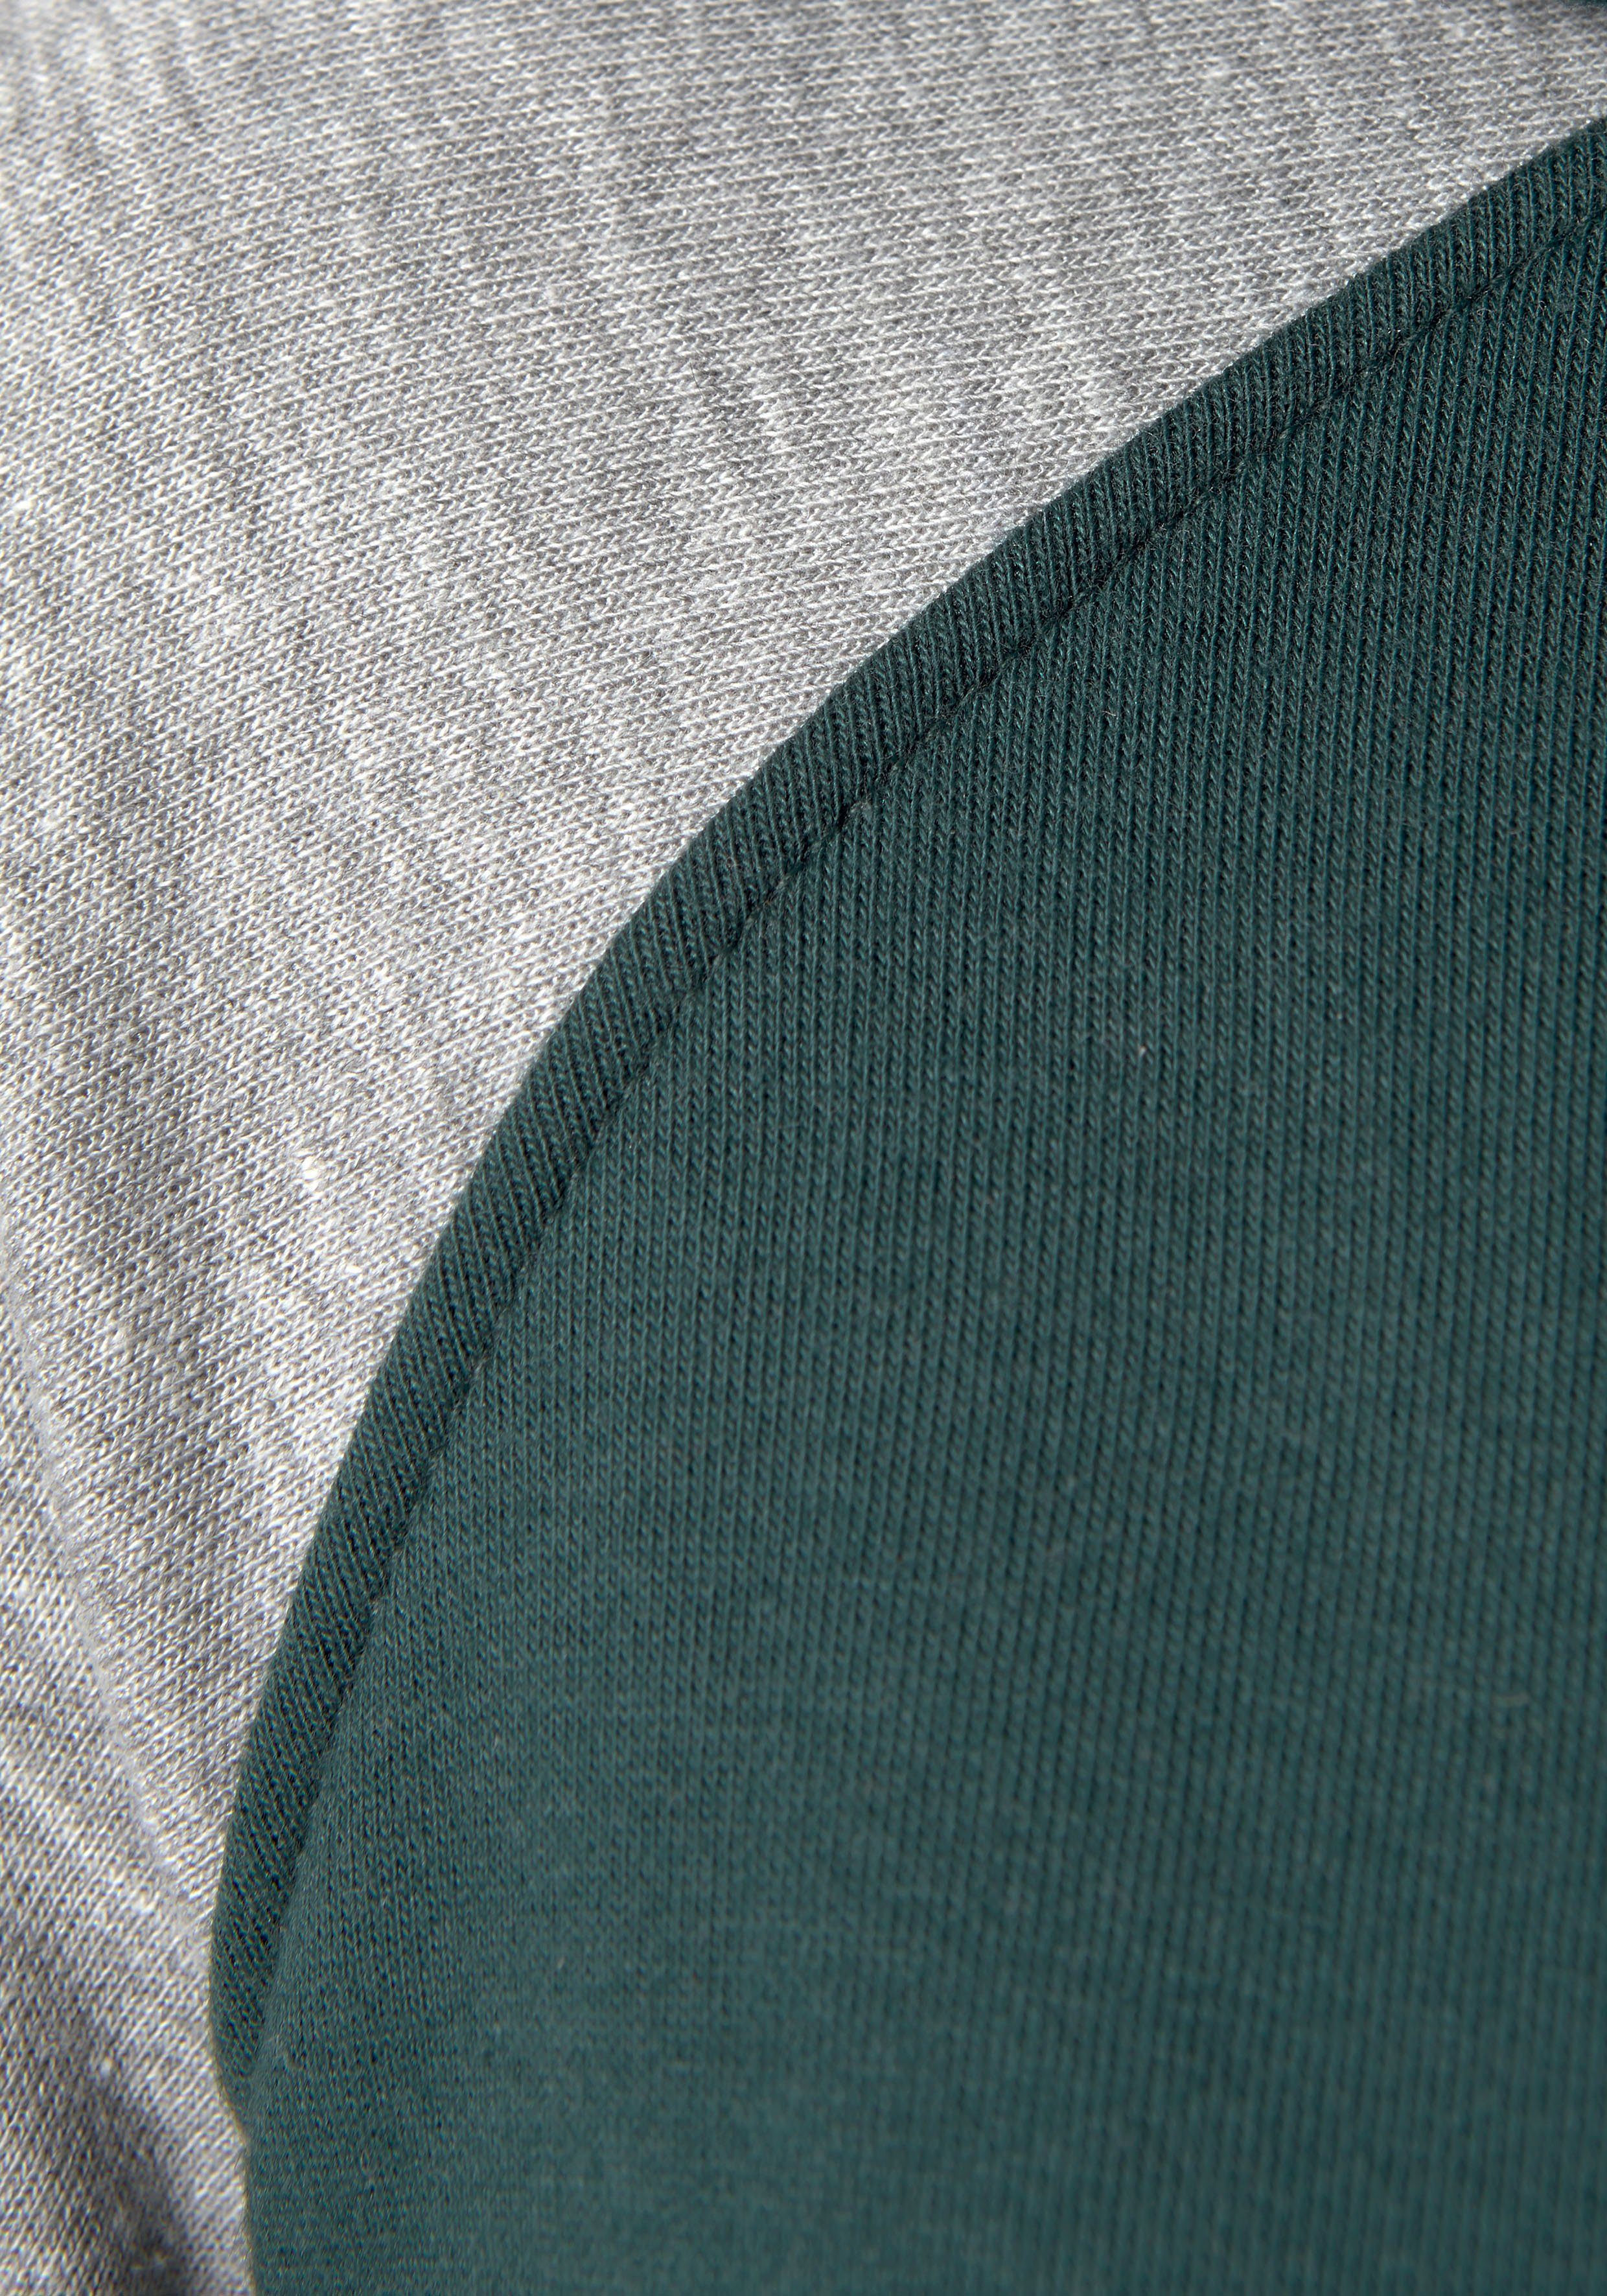 Ärmeln, farblich Bench. Loungeanzug abgesetzten Loungewear dunkelgrün-hellgrau Kapuzensweatjacke mit